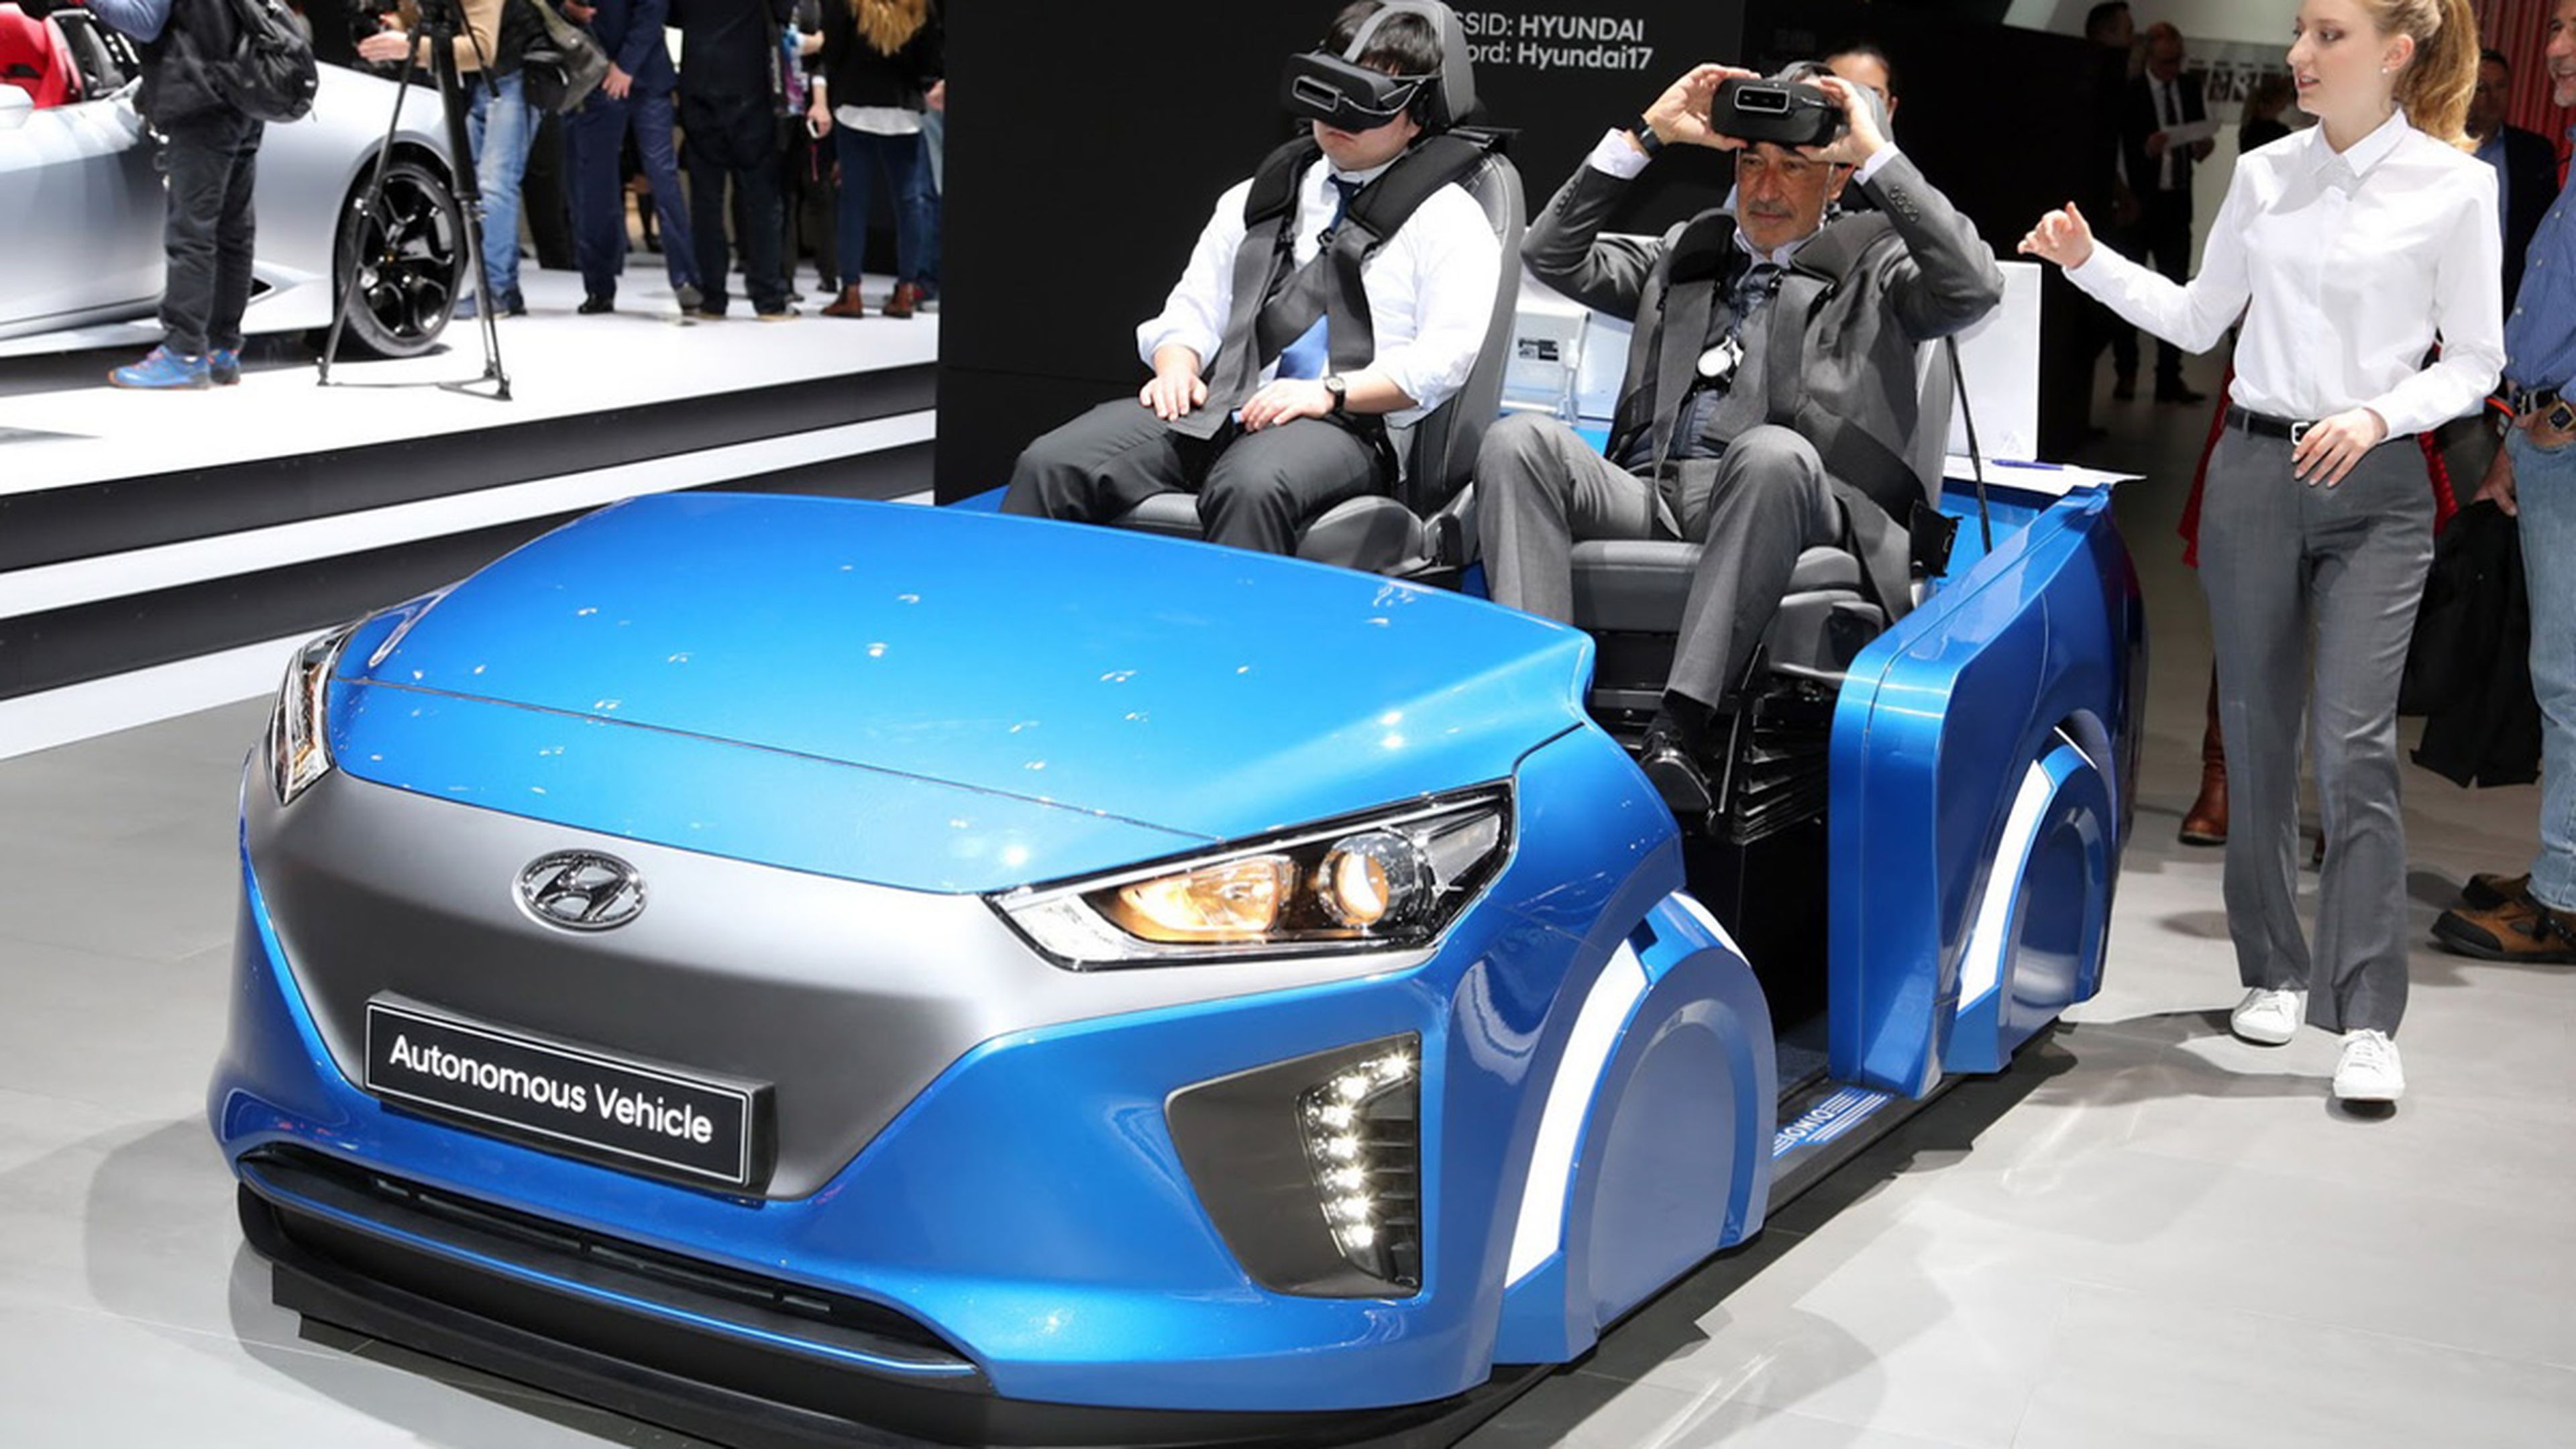 simulador conducción autónoma Hyundai